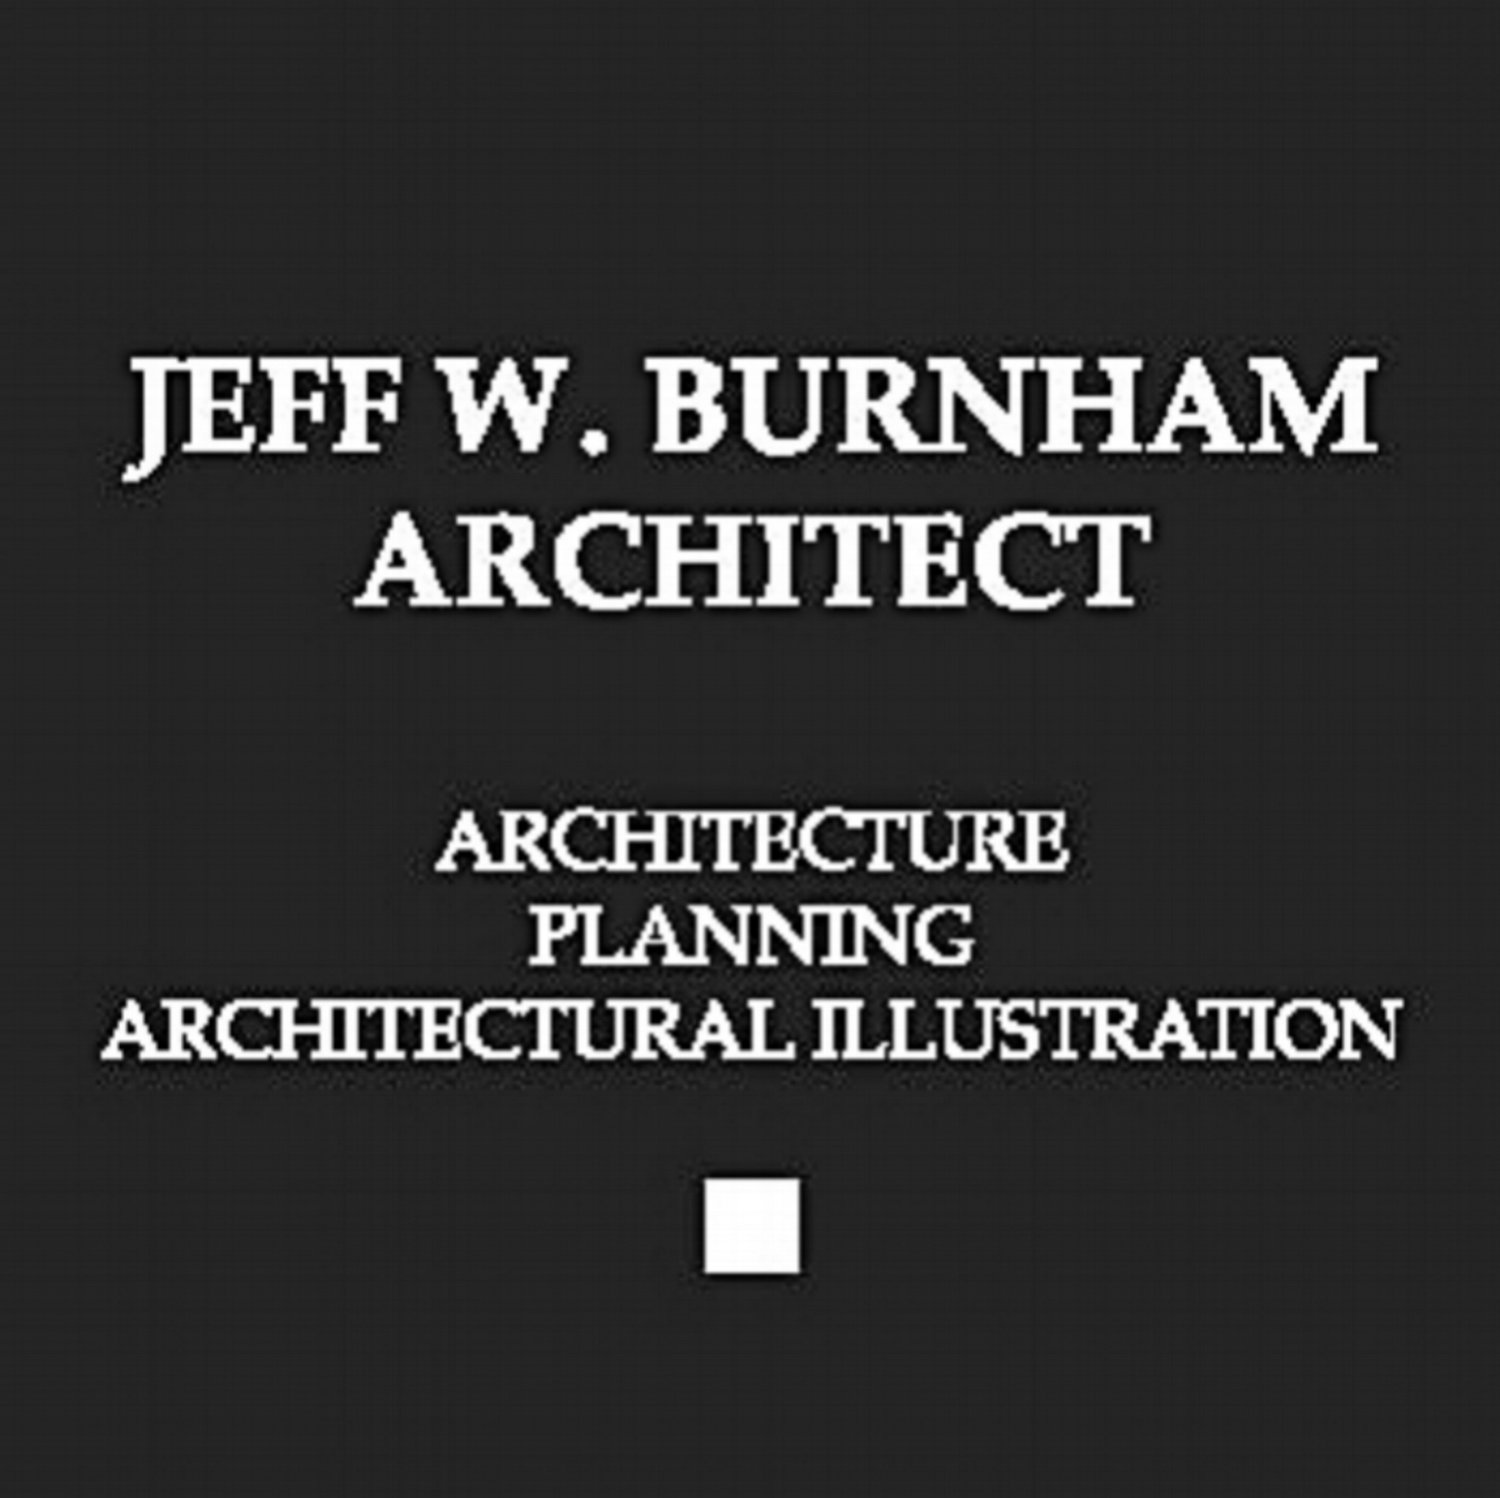 JEFF W. BURNHAM ARCHITECT